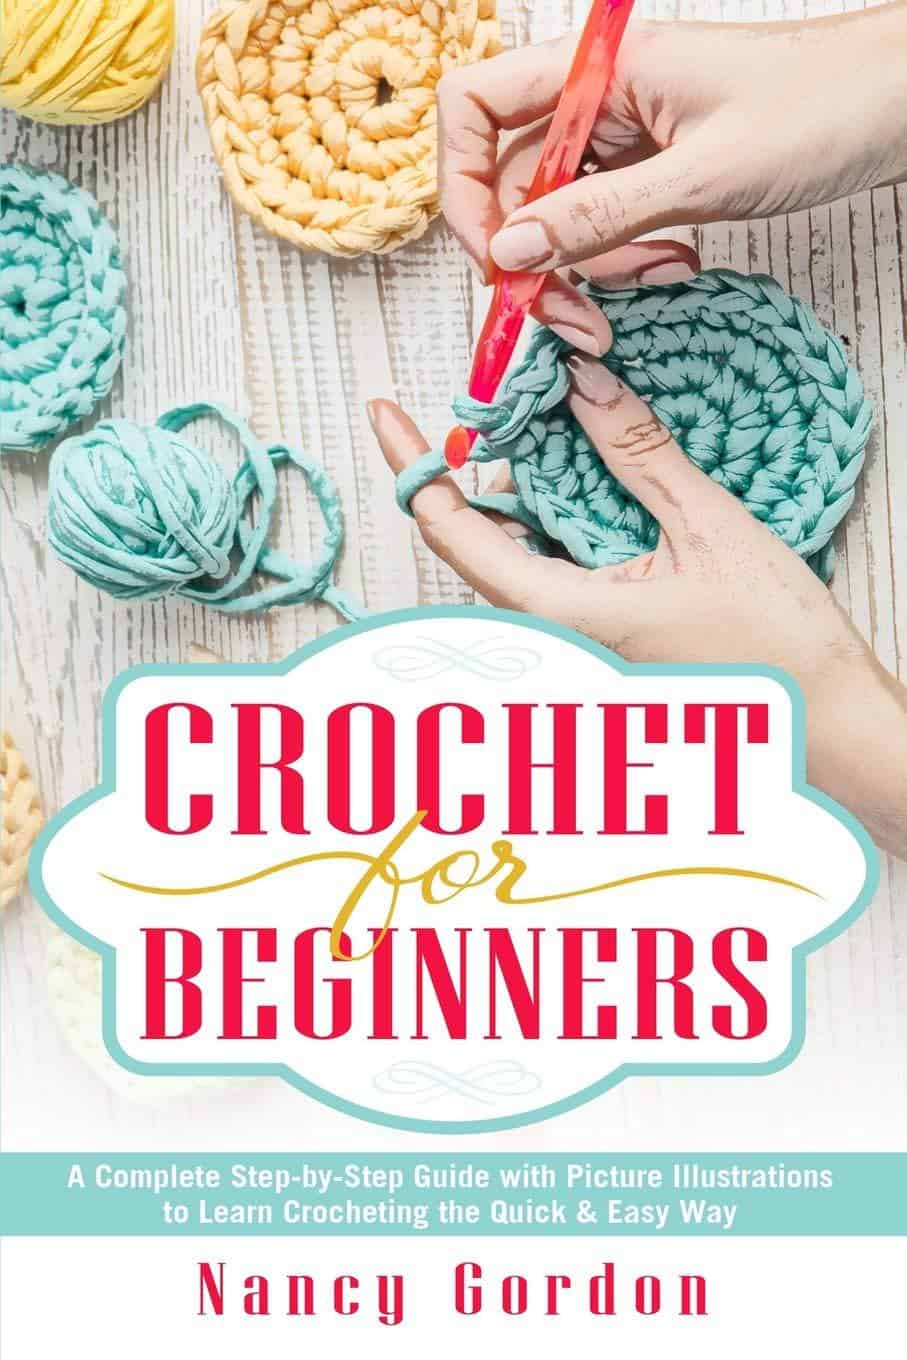 14 MUST HAVE CROCHET BOOKS - Learn the Basics, Stitch Guides, Amigurumi,  and Tunisian Crochet Books 